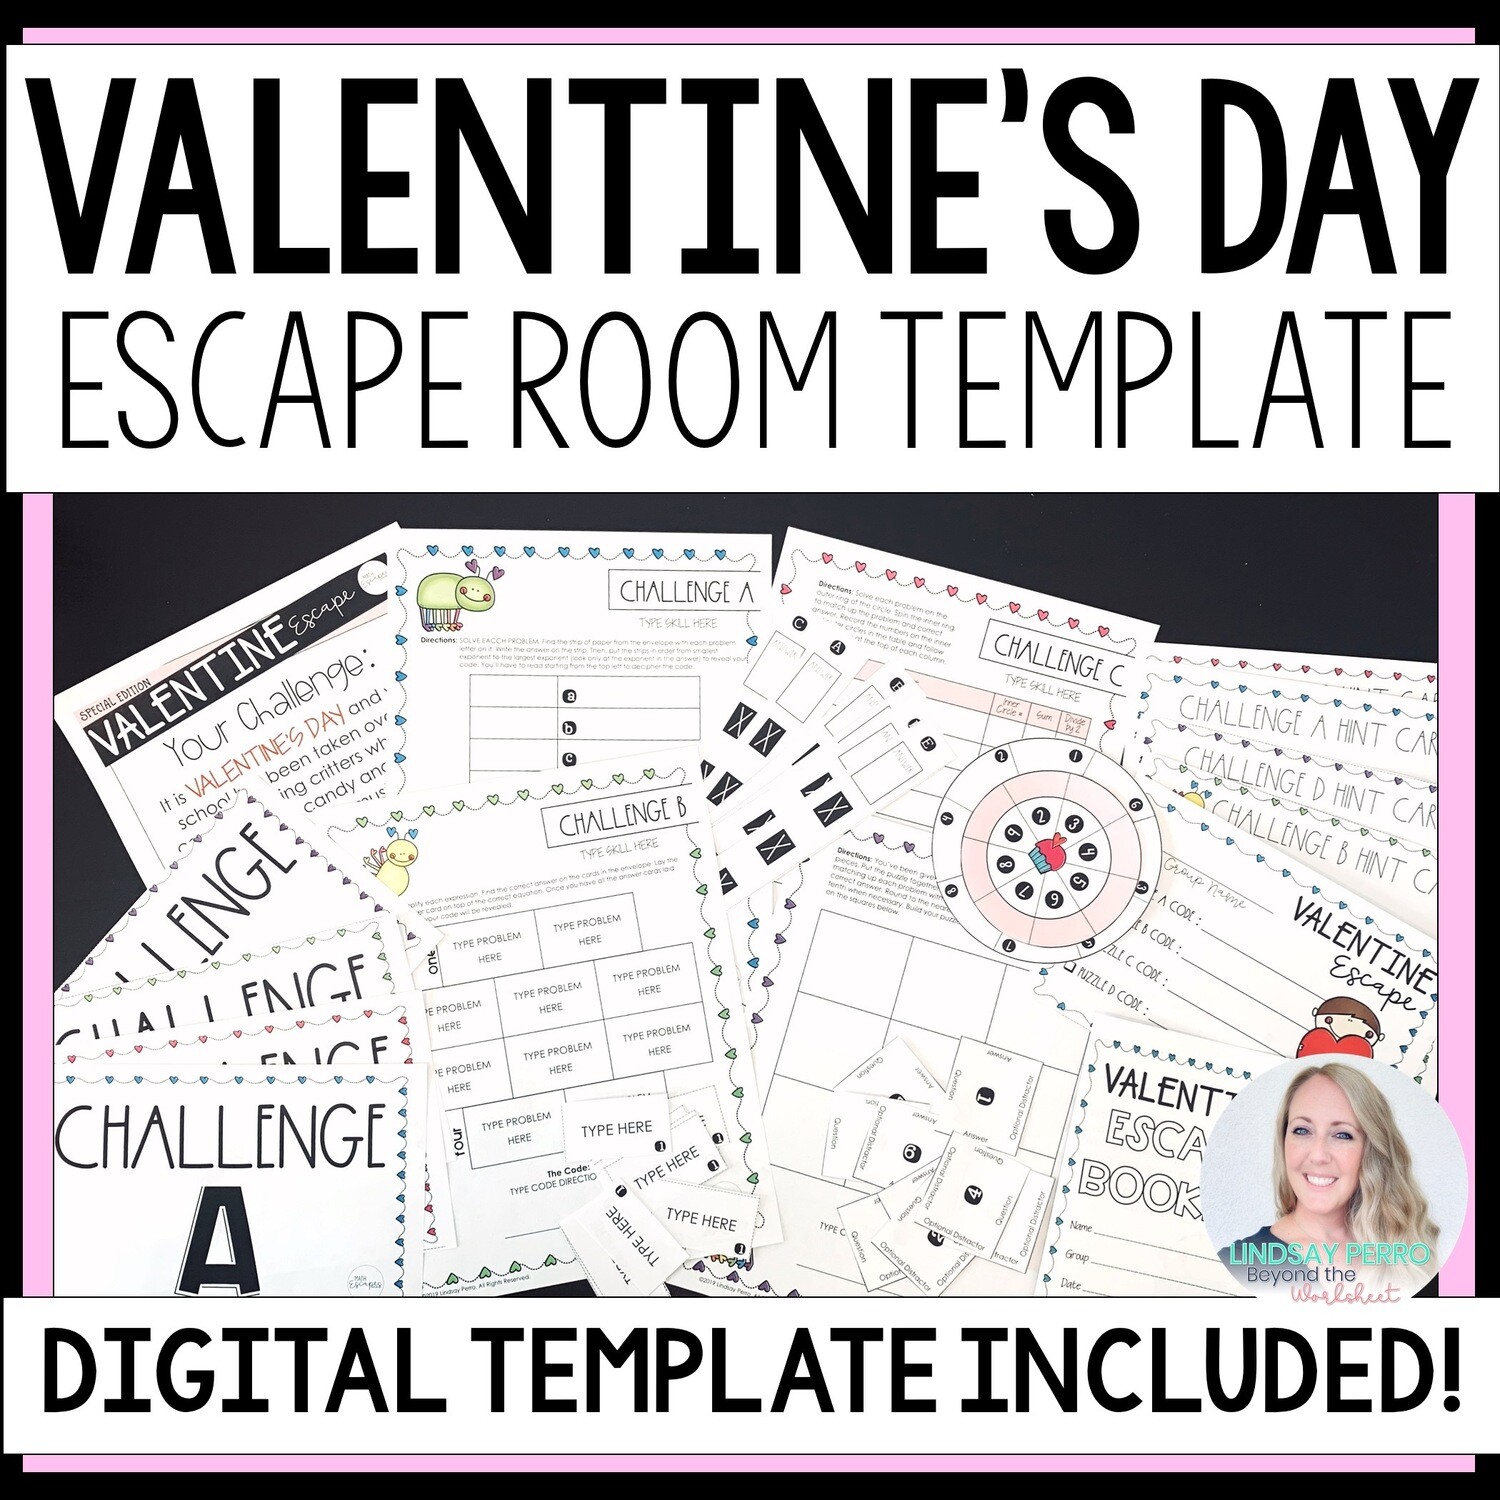 Valentine's Day Escape Room Activity TEMPLATE